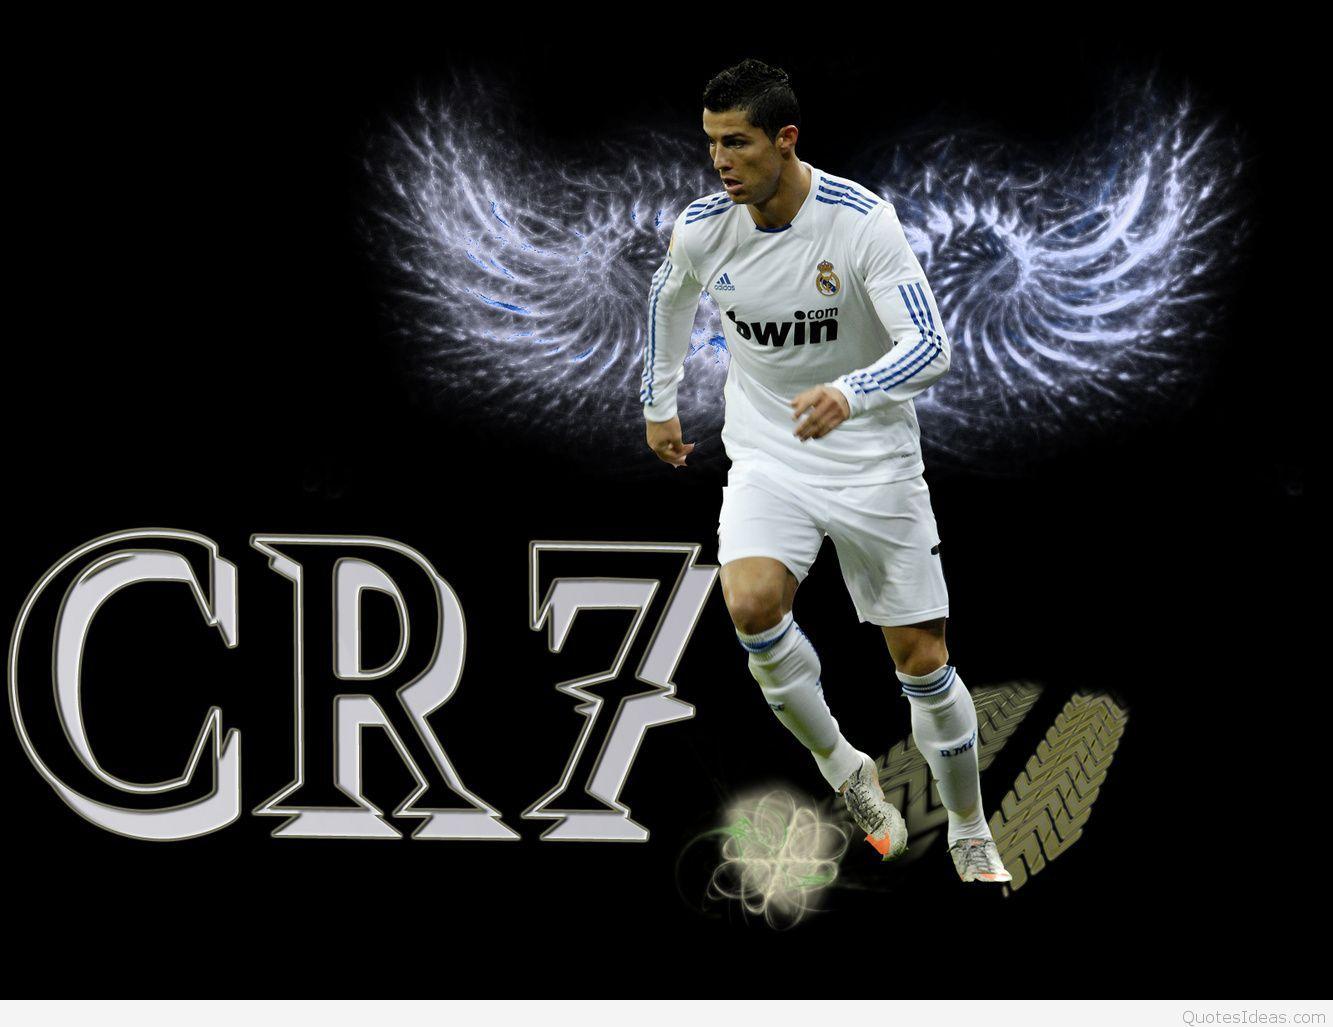 Featured image of post Ronaldo Best Wallpaper Download - +5000 best cristiano ronaldo wallpaper 2.